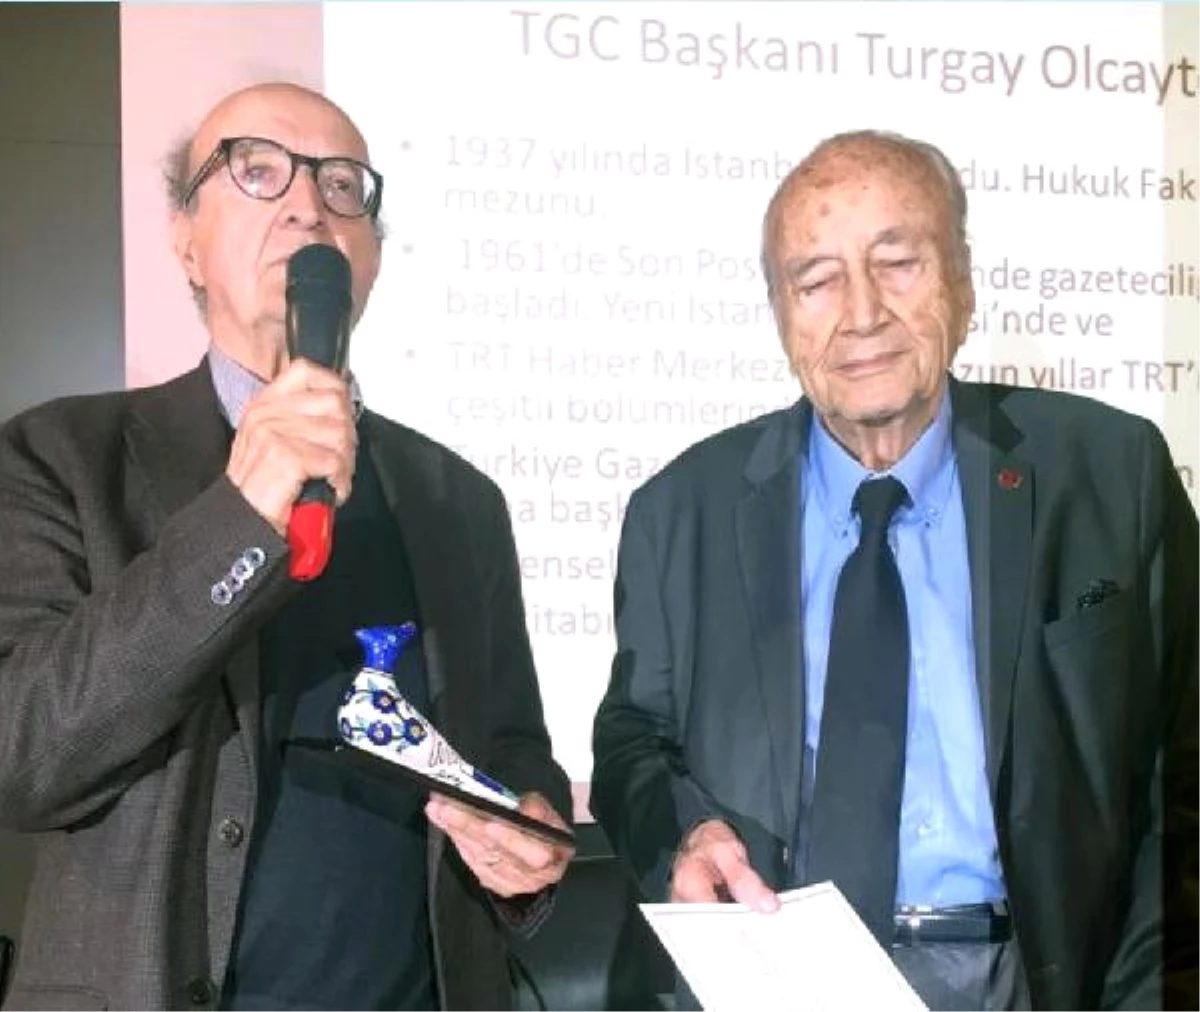 Hıfzı Topuz Onur Ödülü, Tgc Başkanı Turgay Olcayto\'nun